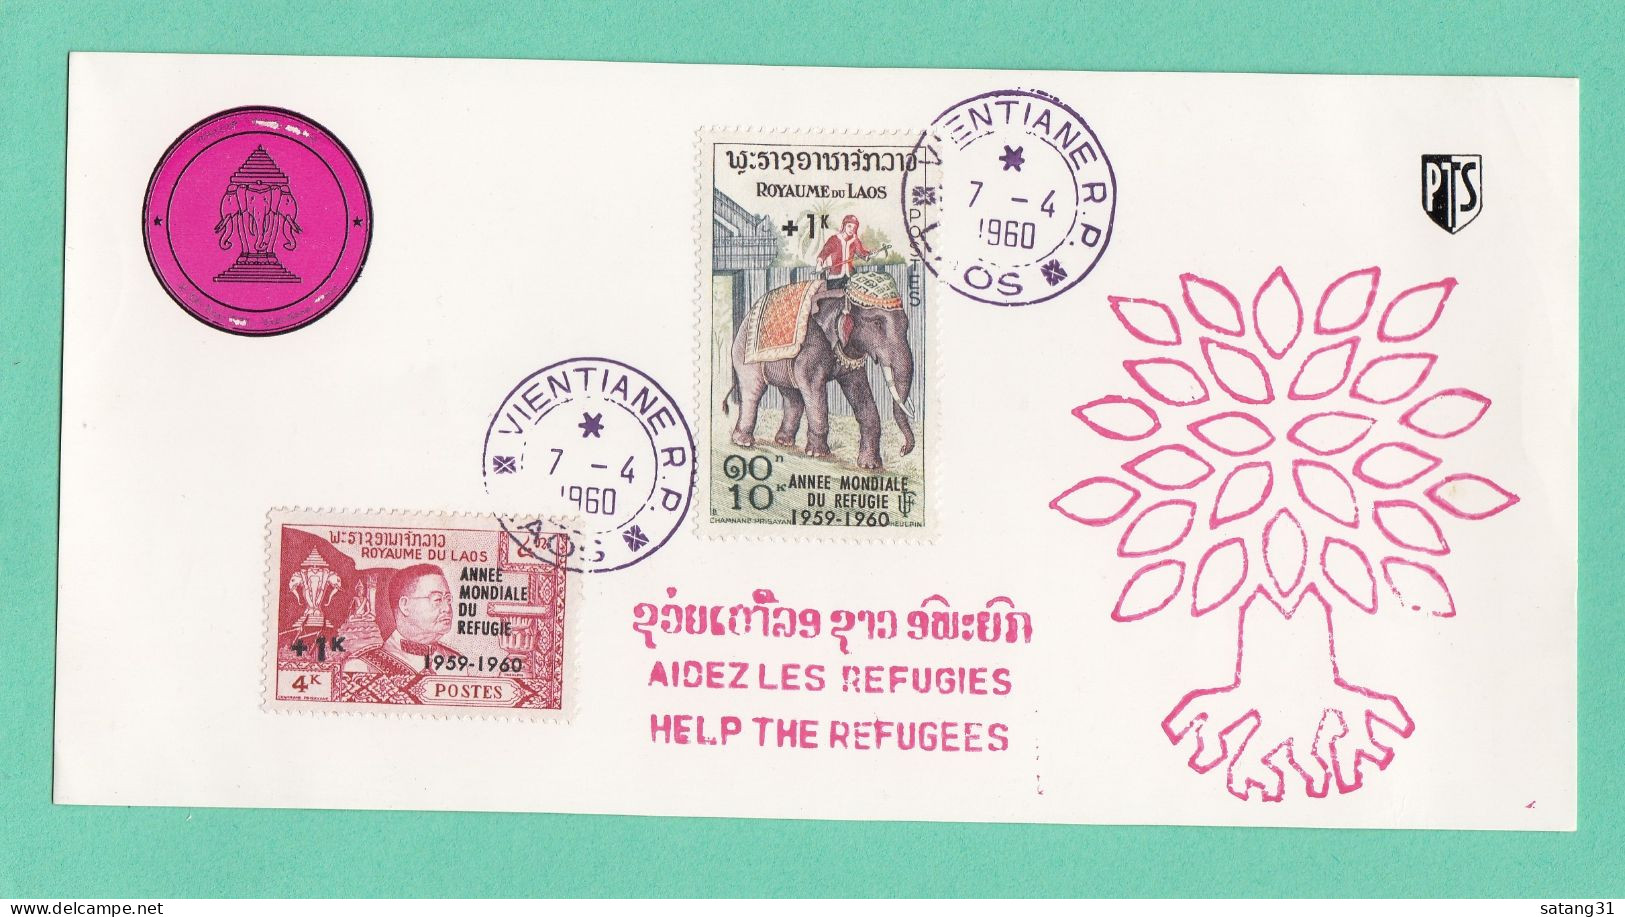 FDC ANNEE MONDIALE DU REFUGIE 7-4-1960. - Laos